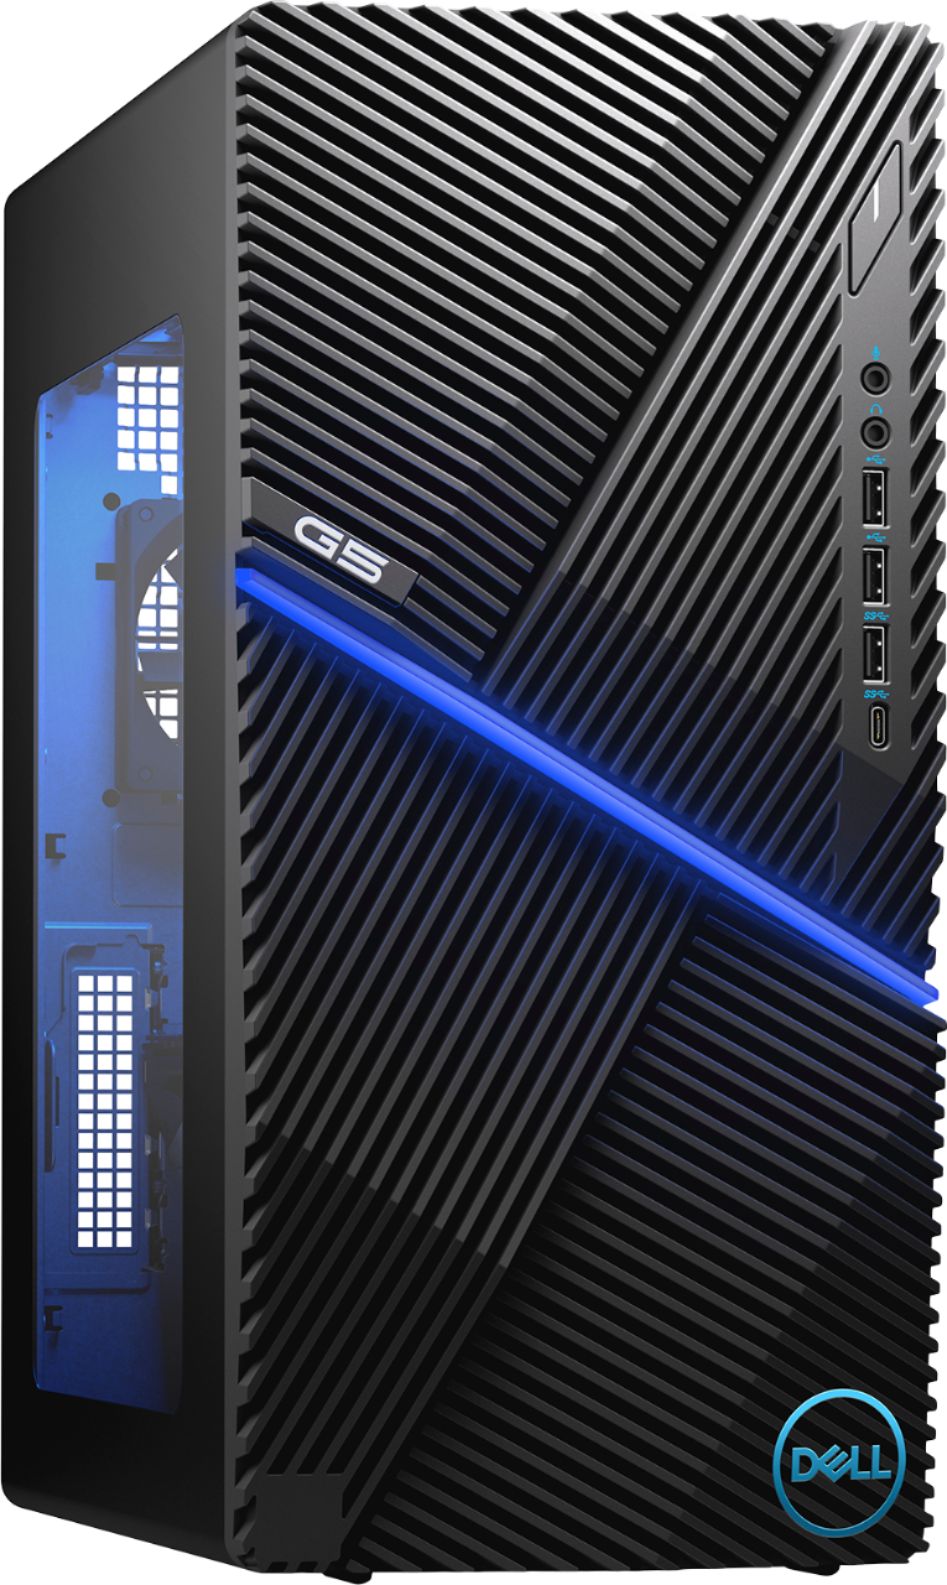 Recyclen prioriteit beweging Best Buy: Dell G5 Gaming Desktop Intel Core i5-10400F 8GB Memory NVIDIA  GeForce GTX 1660 SUPER 1TB HDD + 256GB SSD Black/clear side panel  i5000-5378BLK-PUS